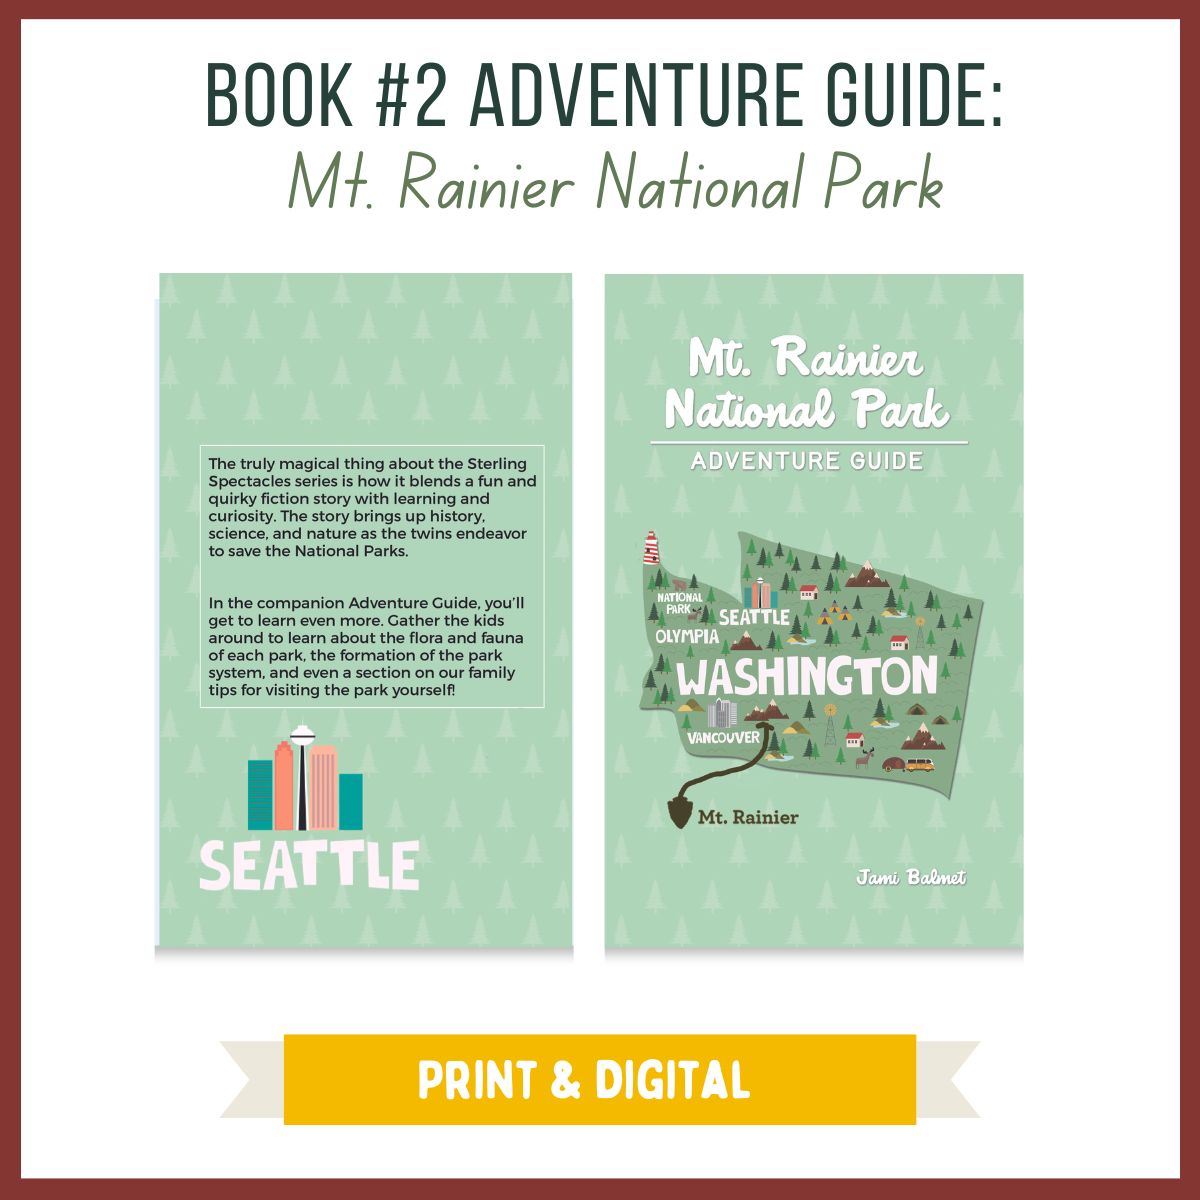 Book #2: Adventure Guide - PRINT